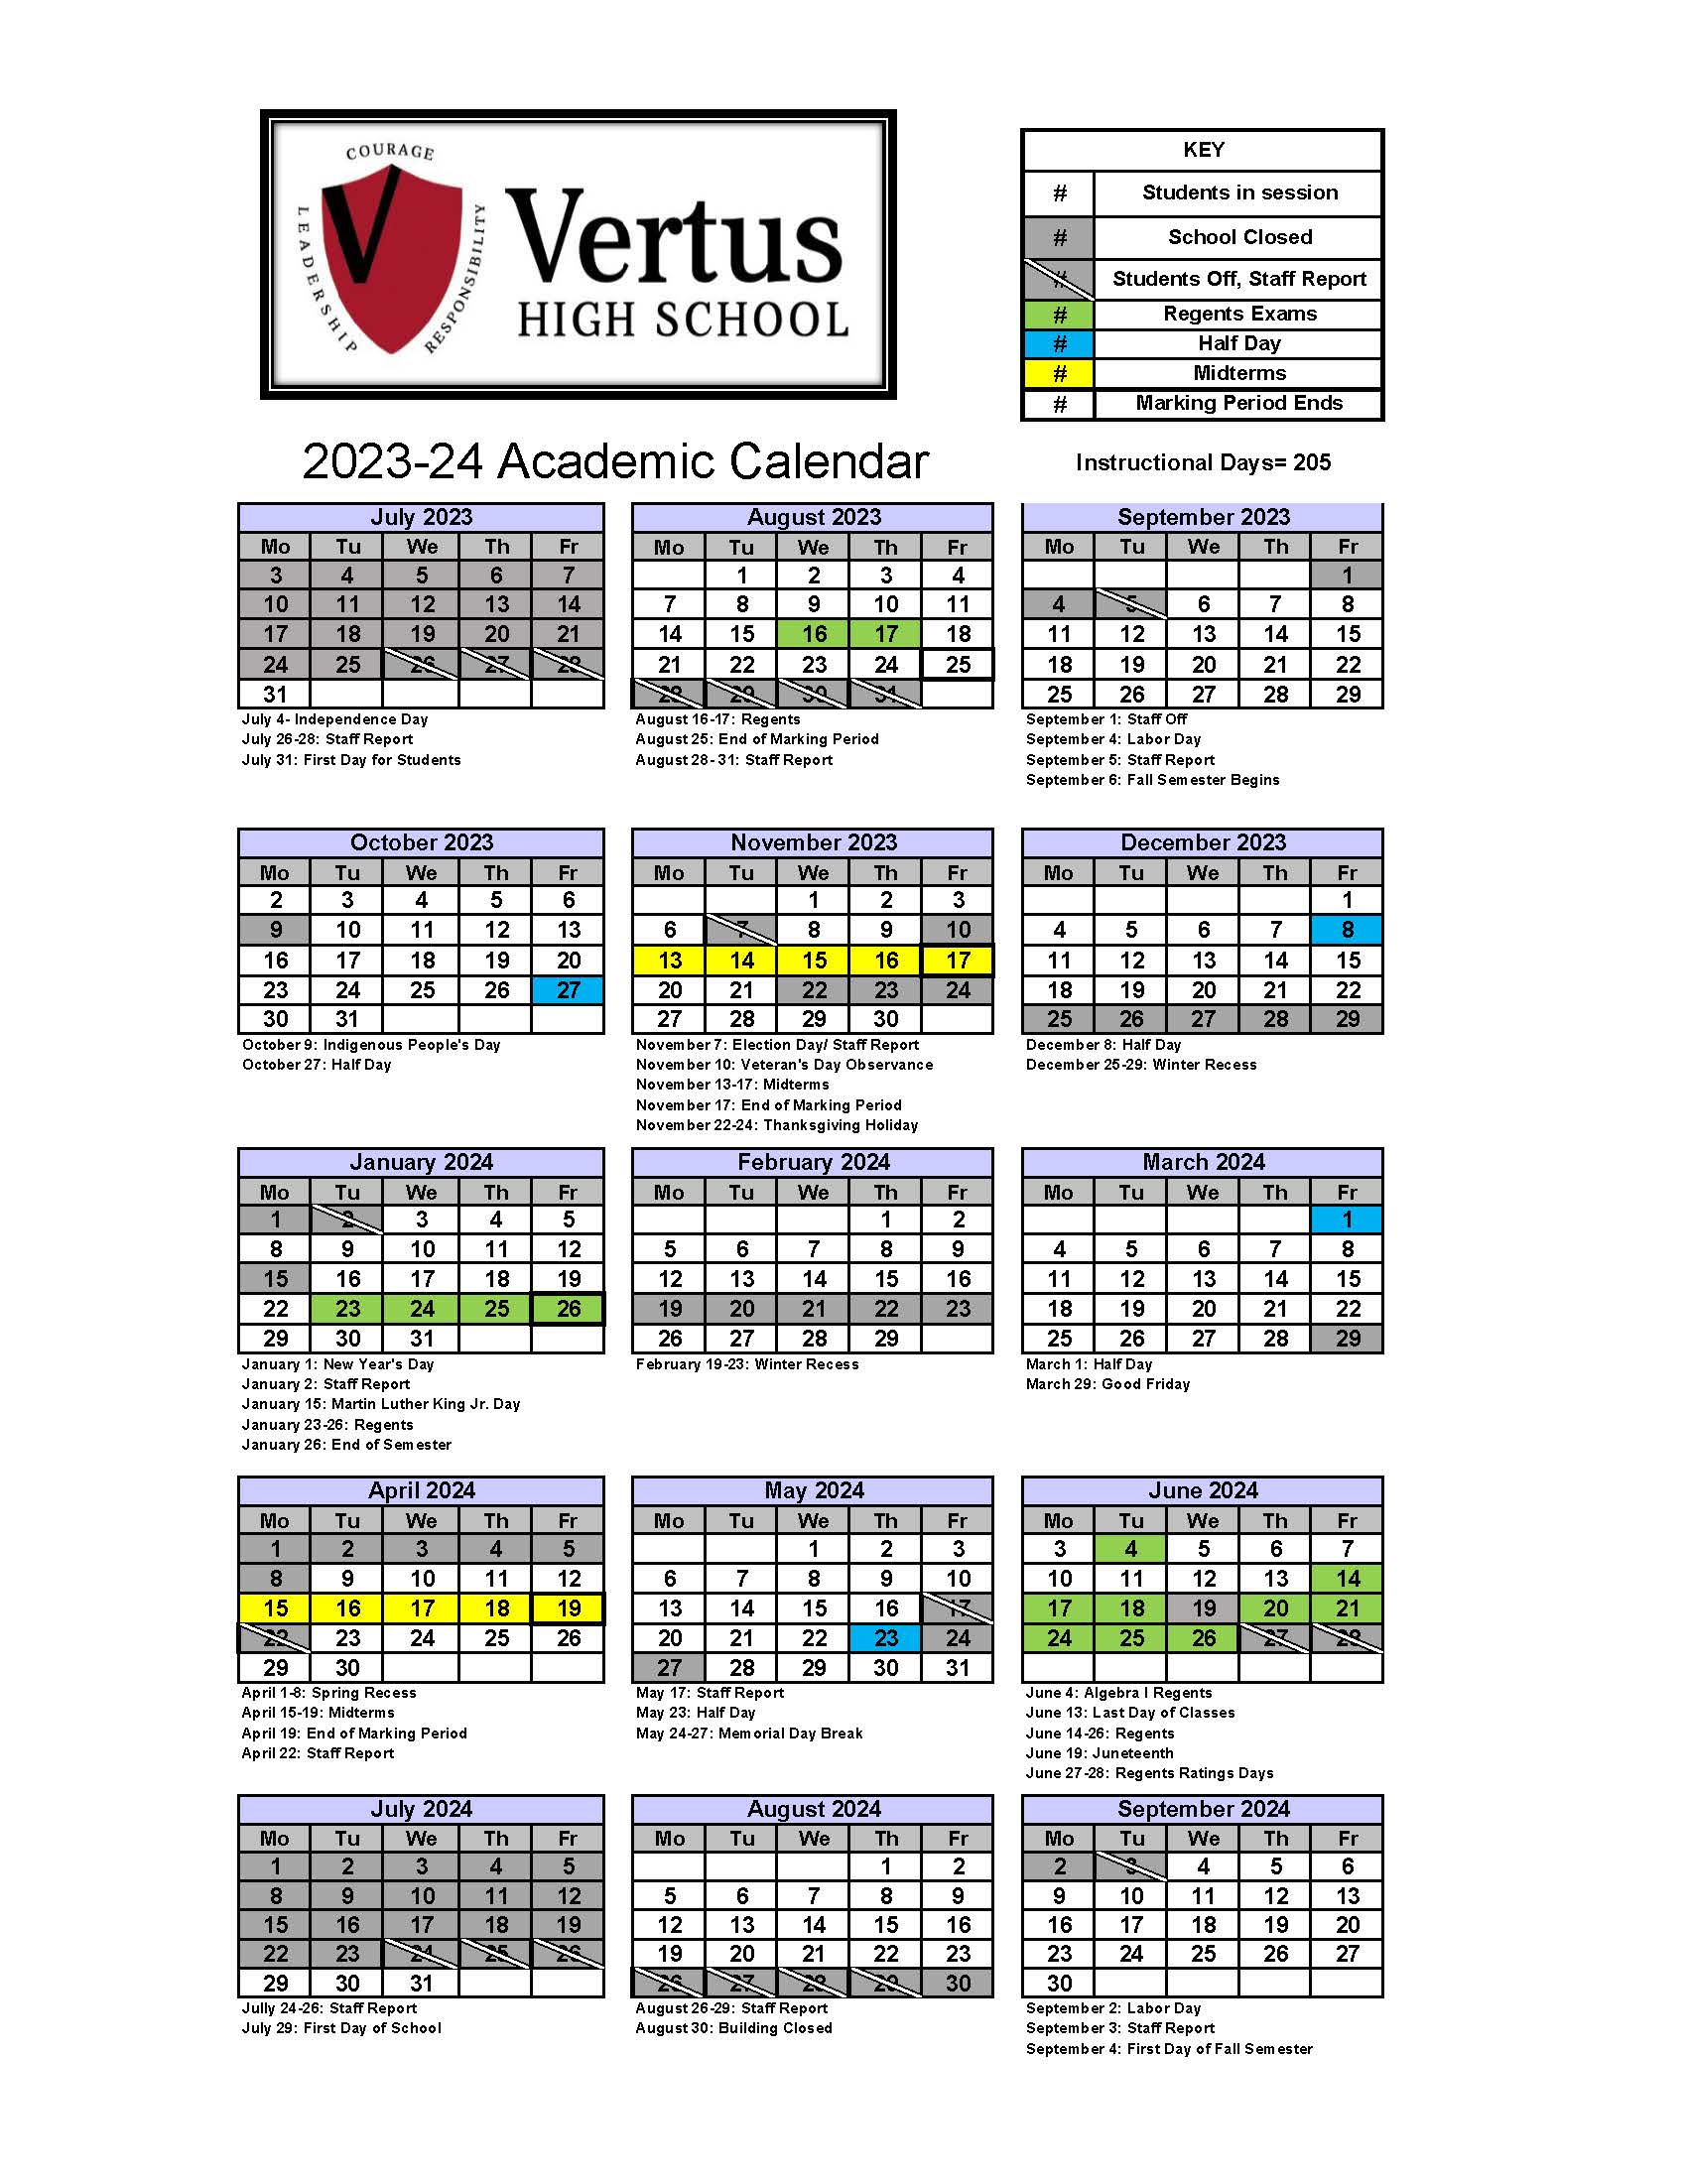 Vertus Calendar 2023 2024 Final